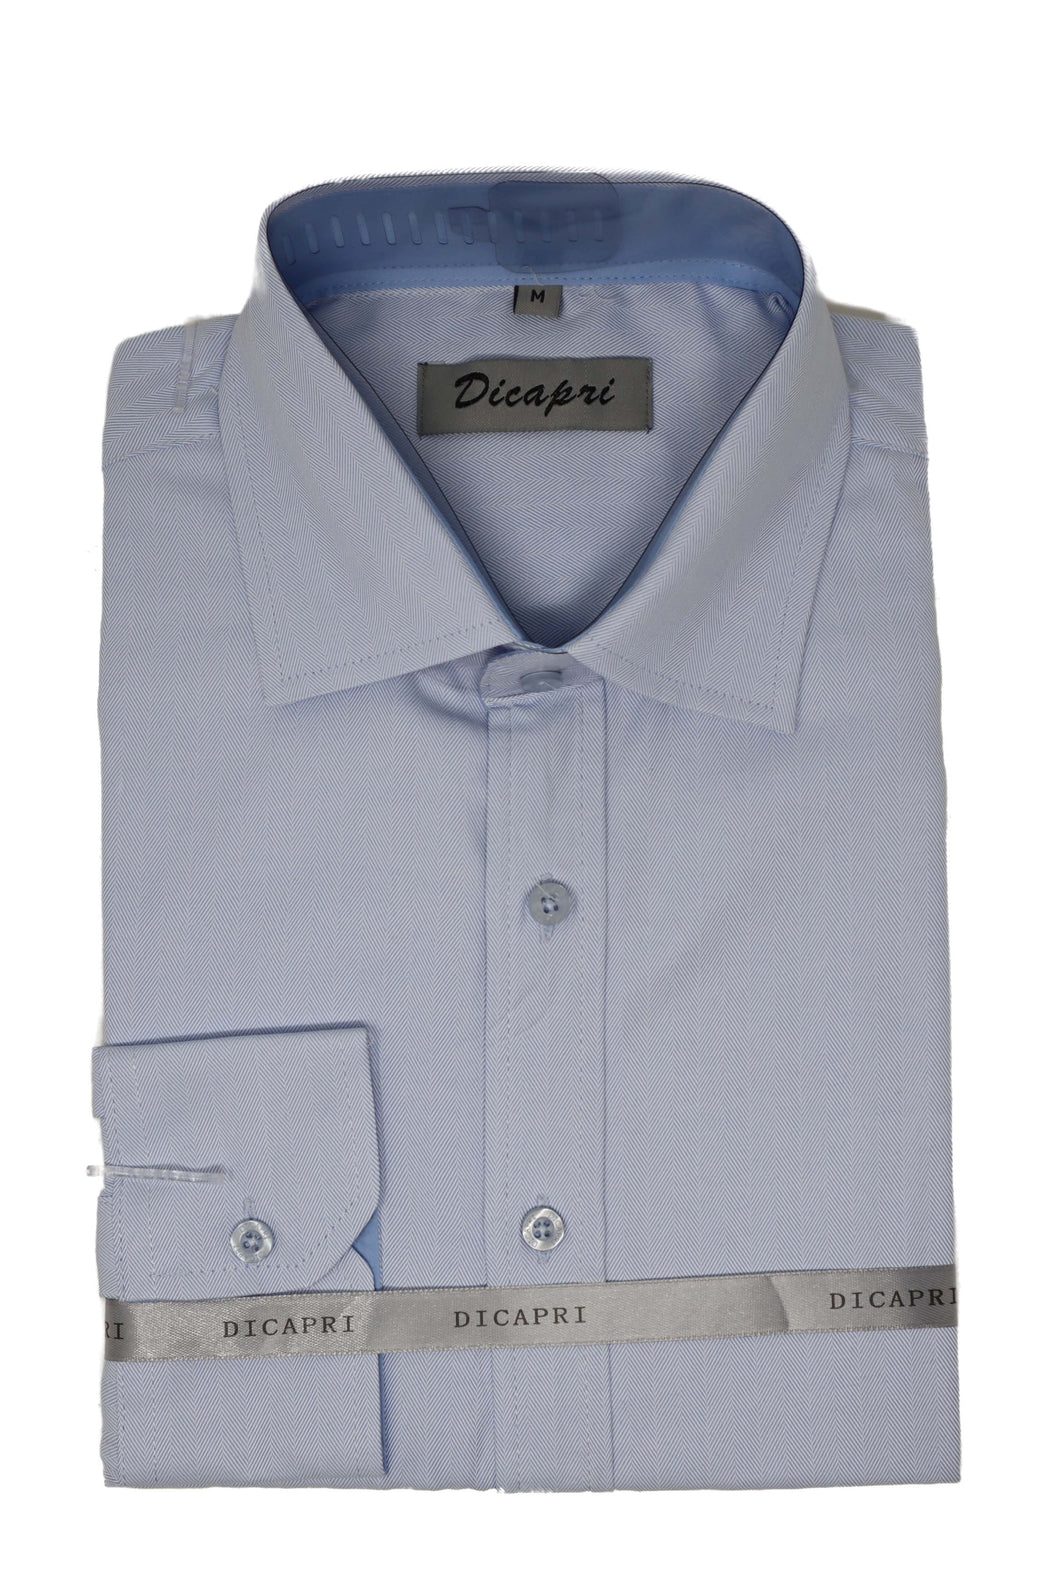 Men's | Dicapri | DS1702 | Dress Shirt | Light Blue